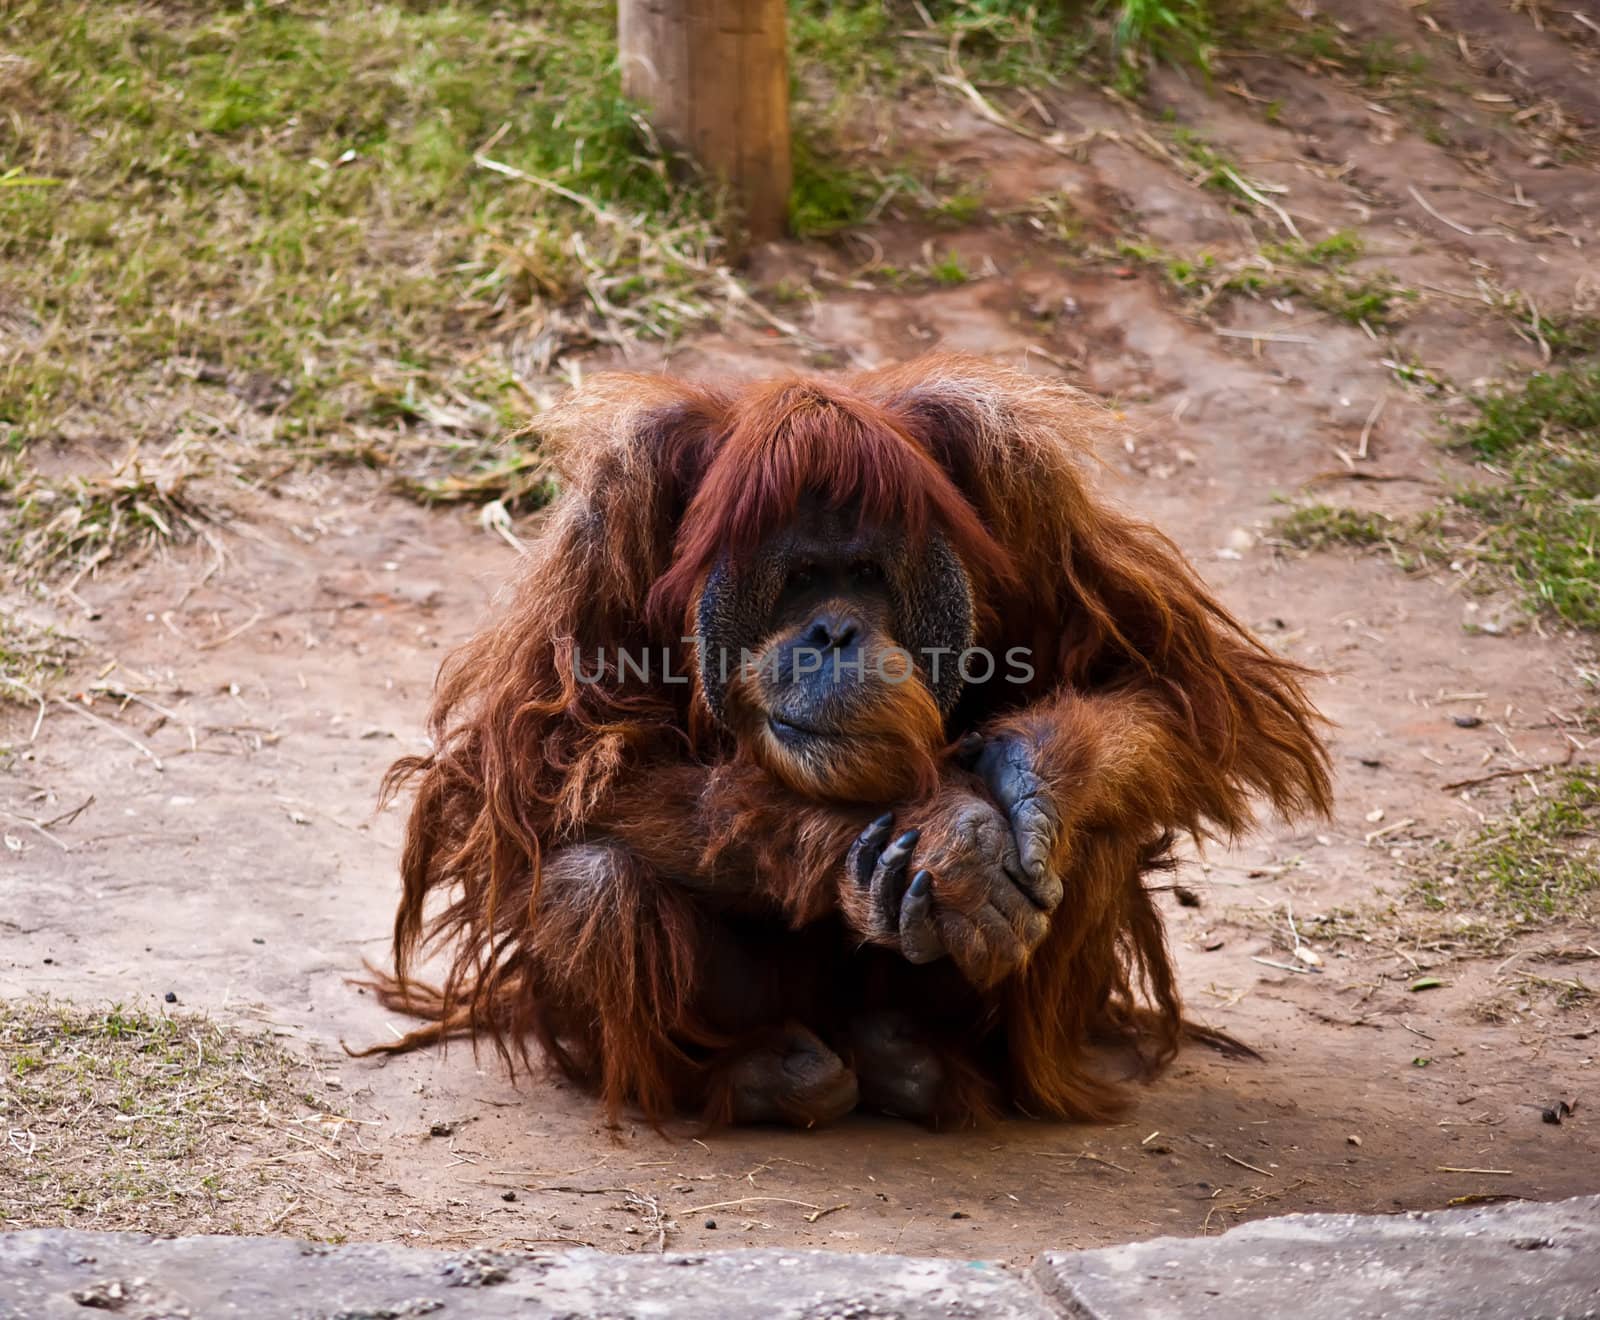 Portrait of a thoughtful adult orangutan.